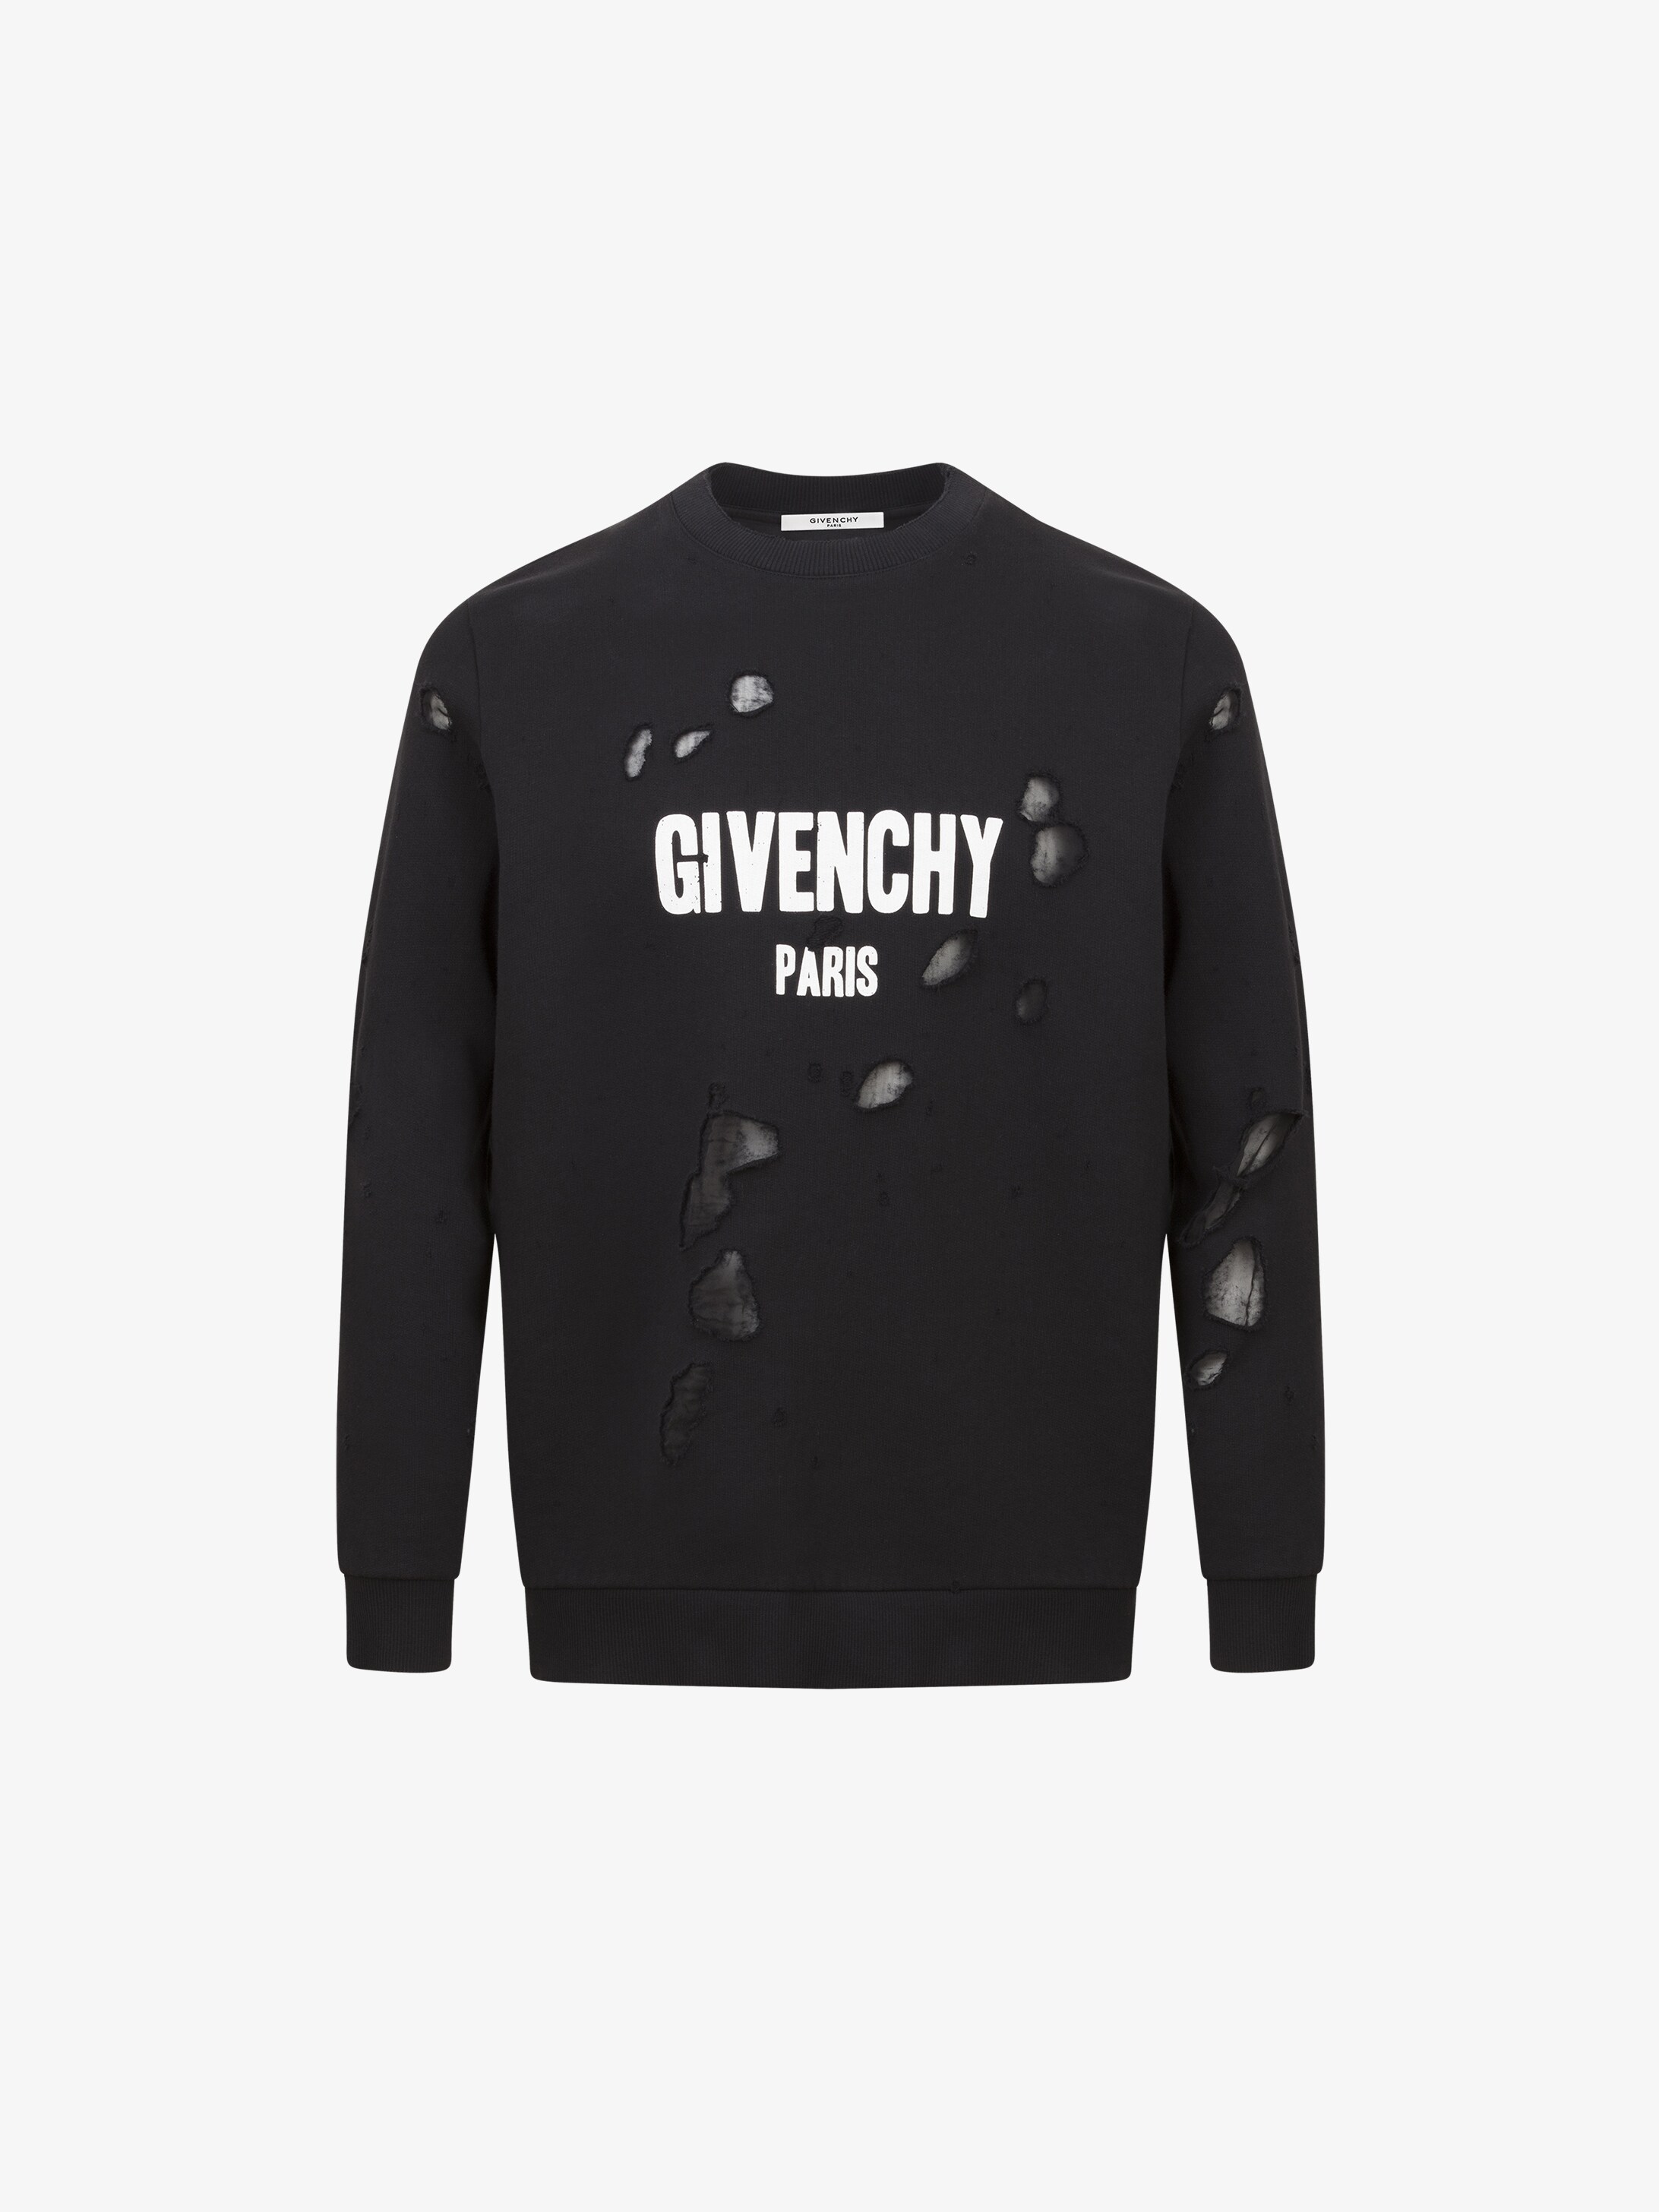 givenchy paris black sweatshirt